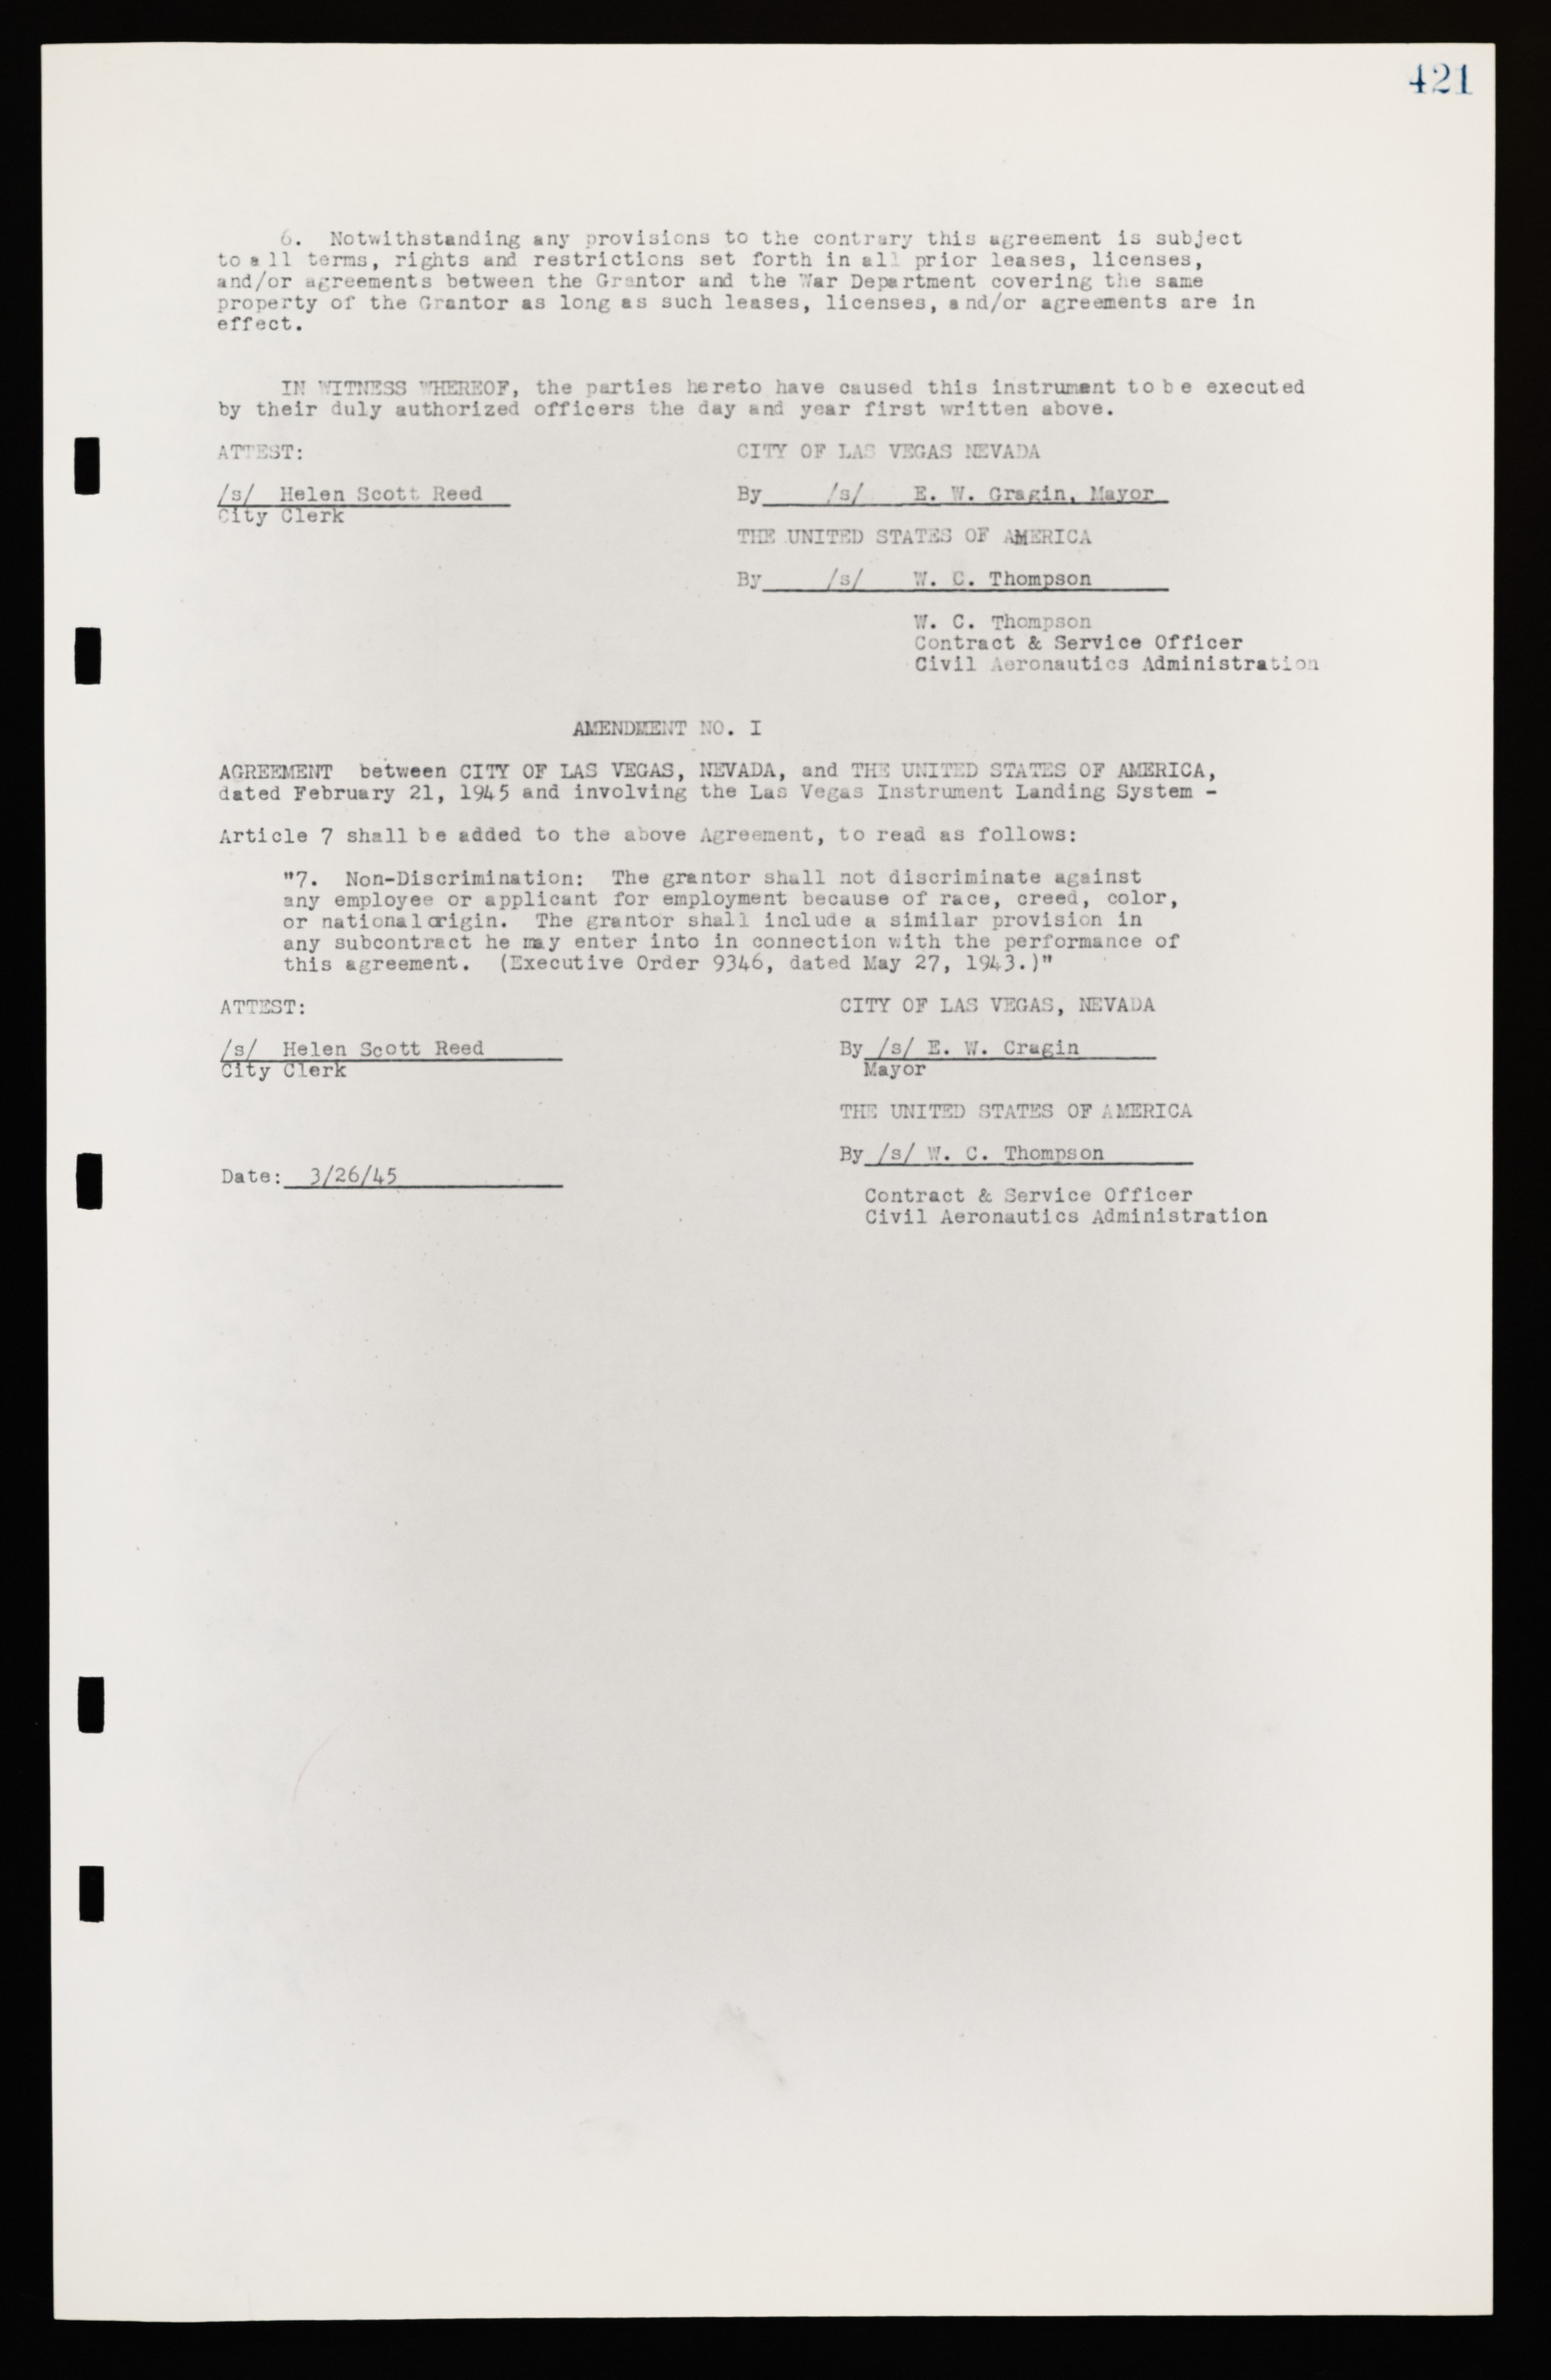 Las Vegas City Commission Legal Documents, February 29, 1944 to February 21, 1945, lvc000016-114